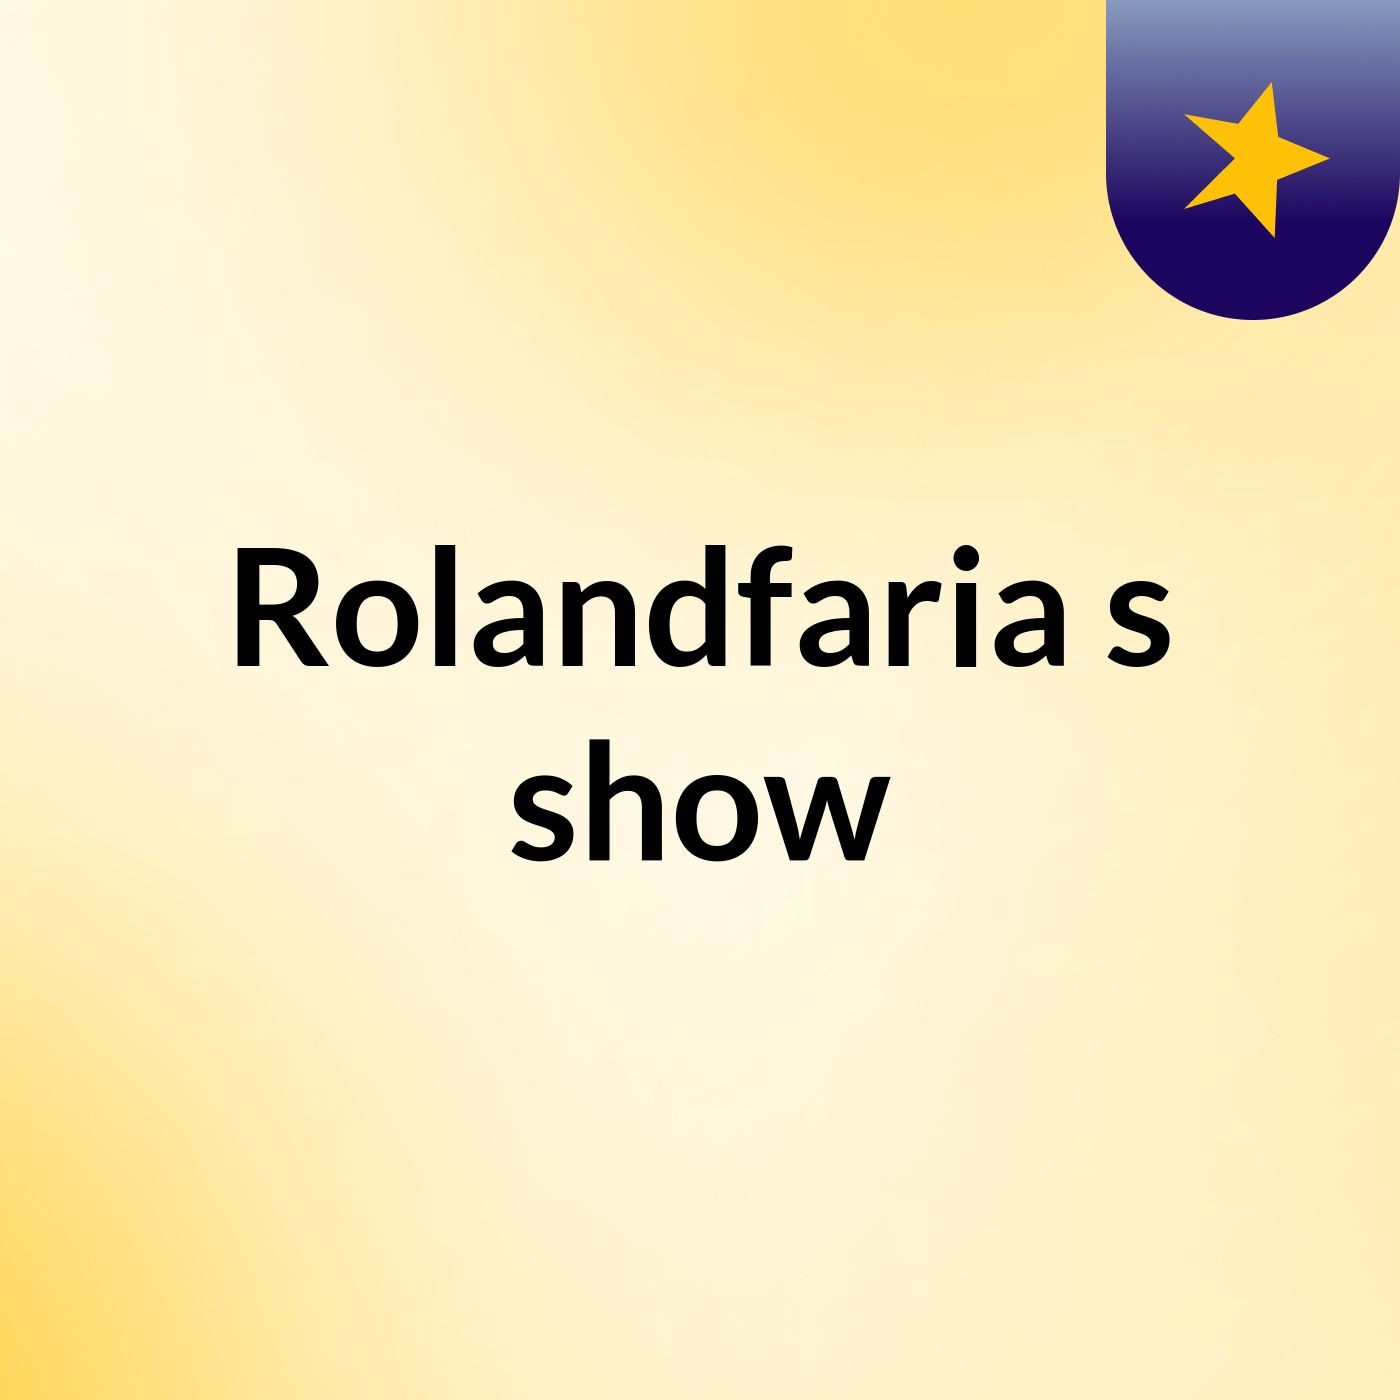 Rolandfaria's show